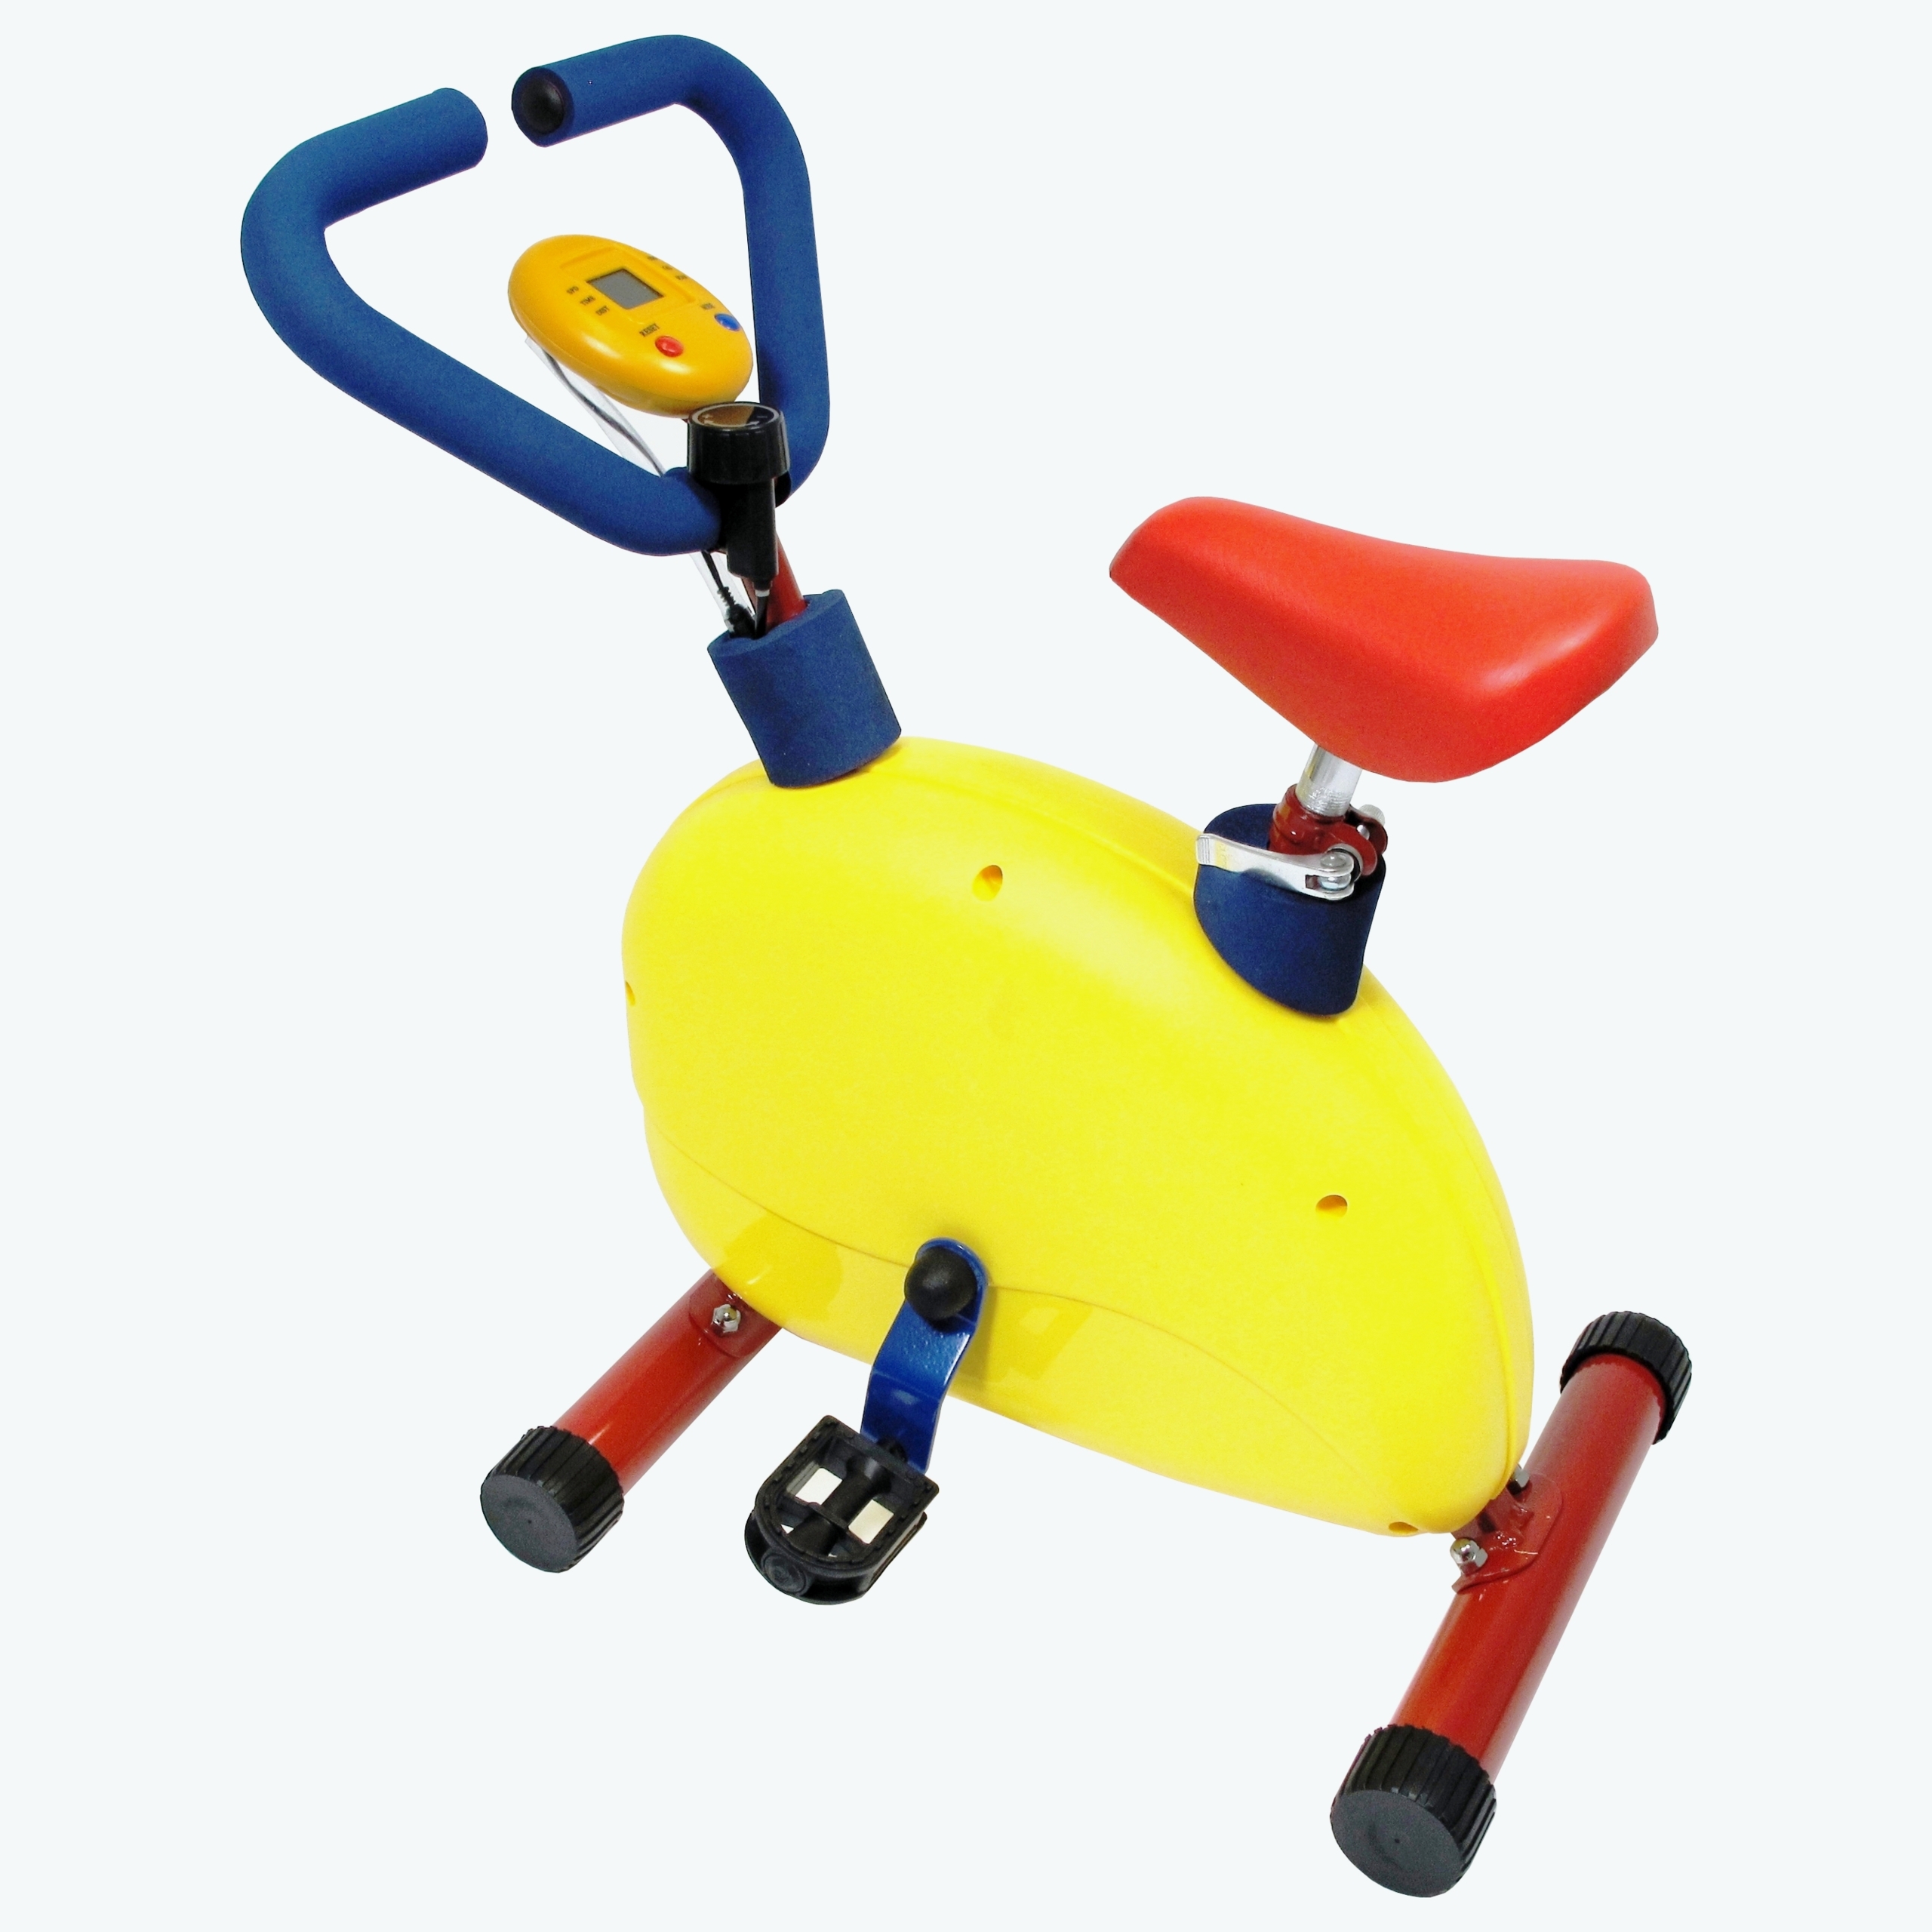 Toddler gym equipment